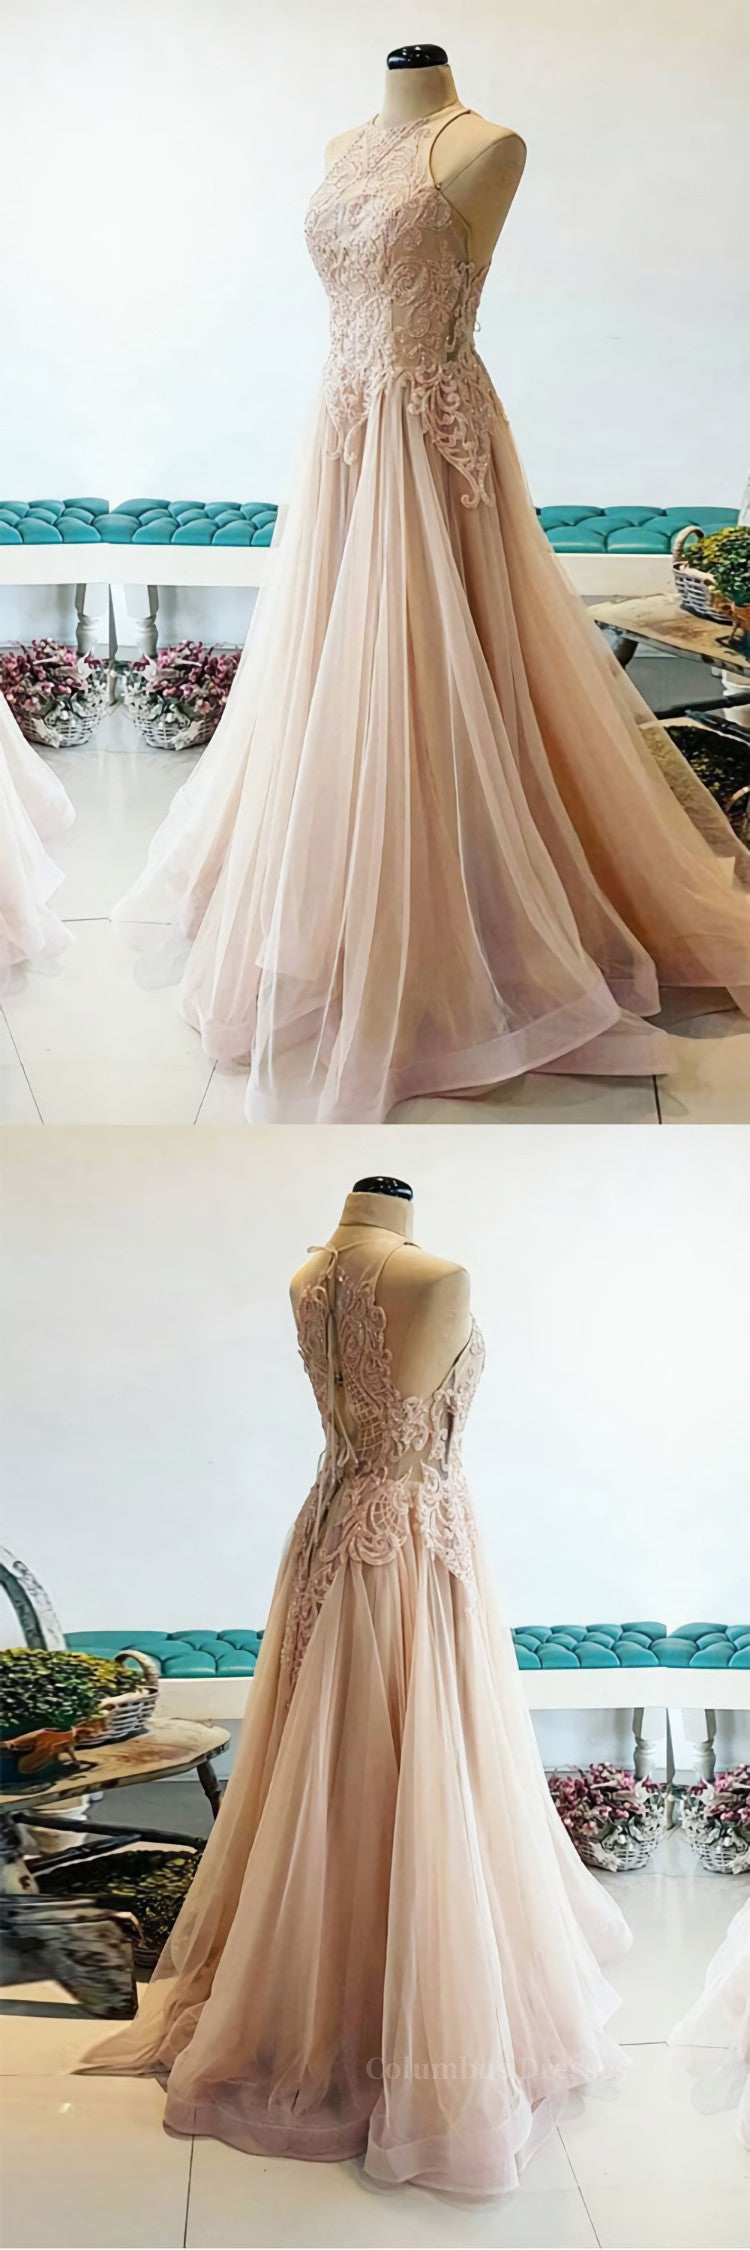 Formal Dresses For Wedding, Champagne tulle lace long prom dress, champagne tulle evening dress